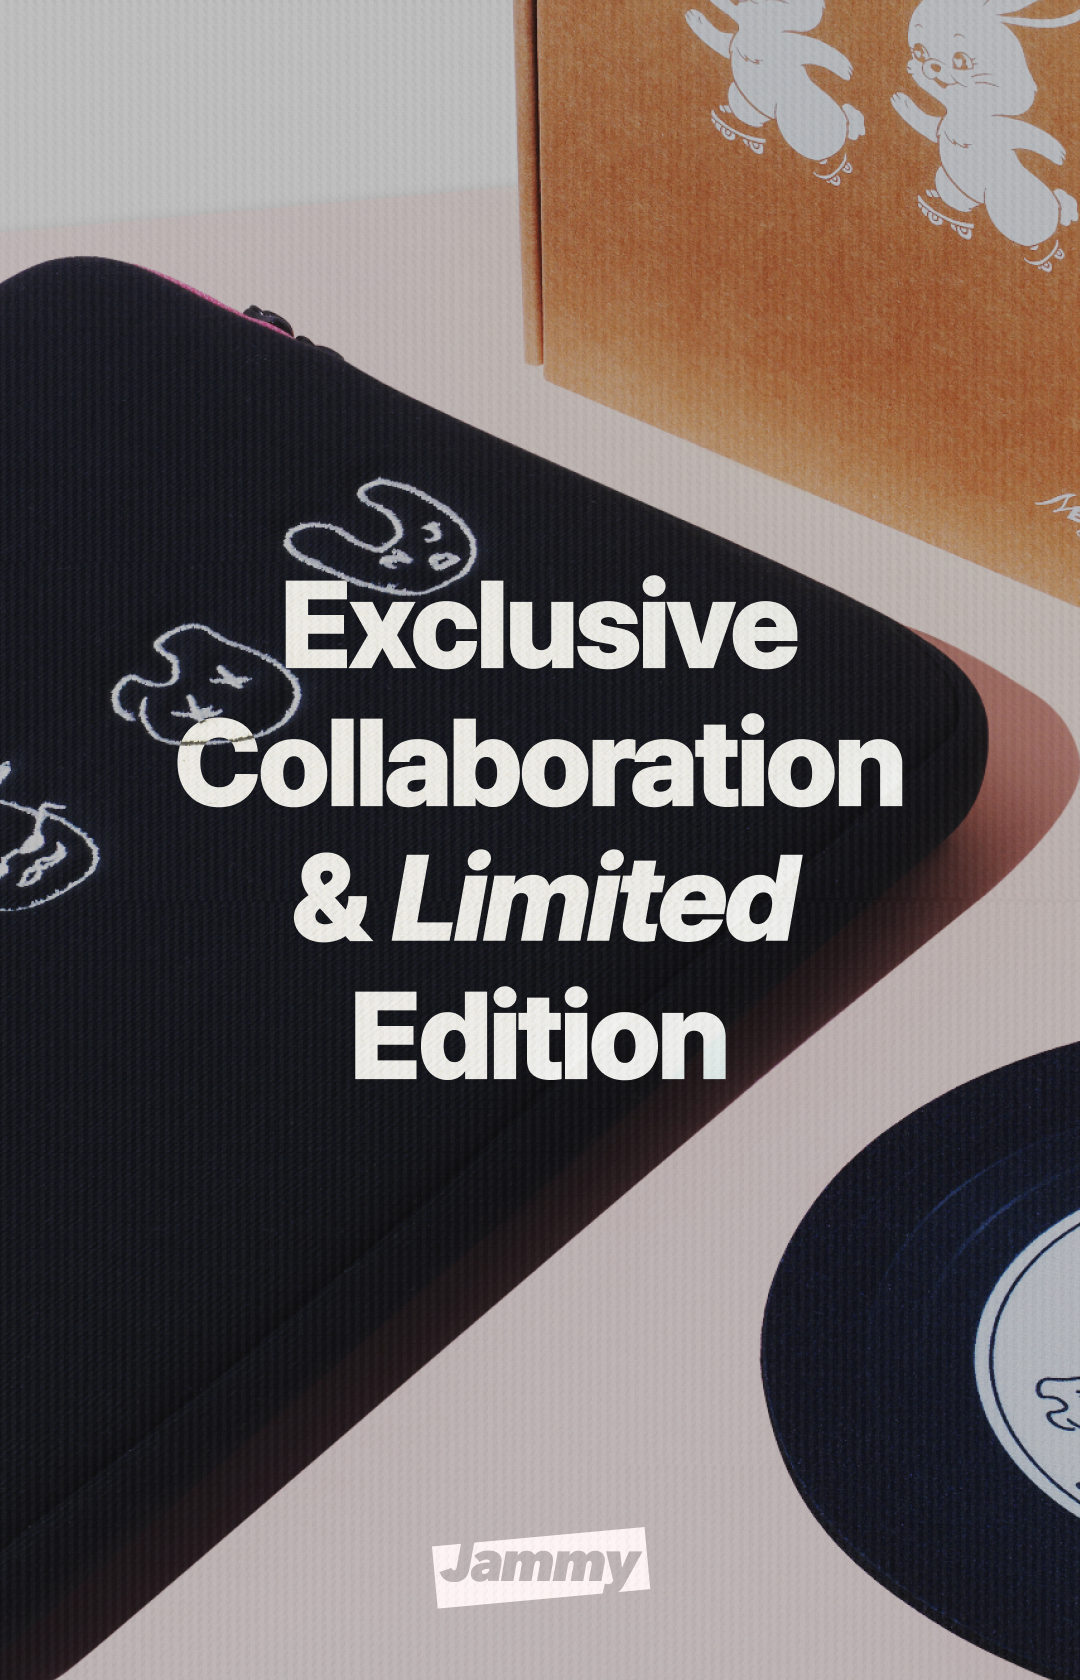 Exclusive Collaboration & Edition